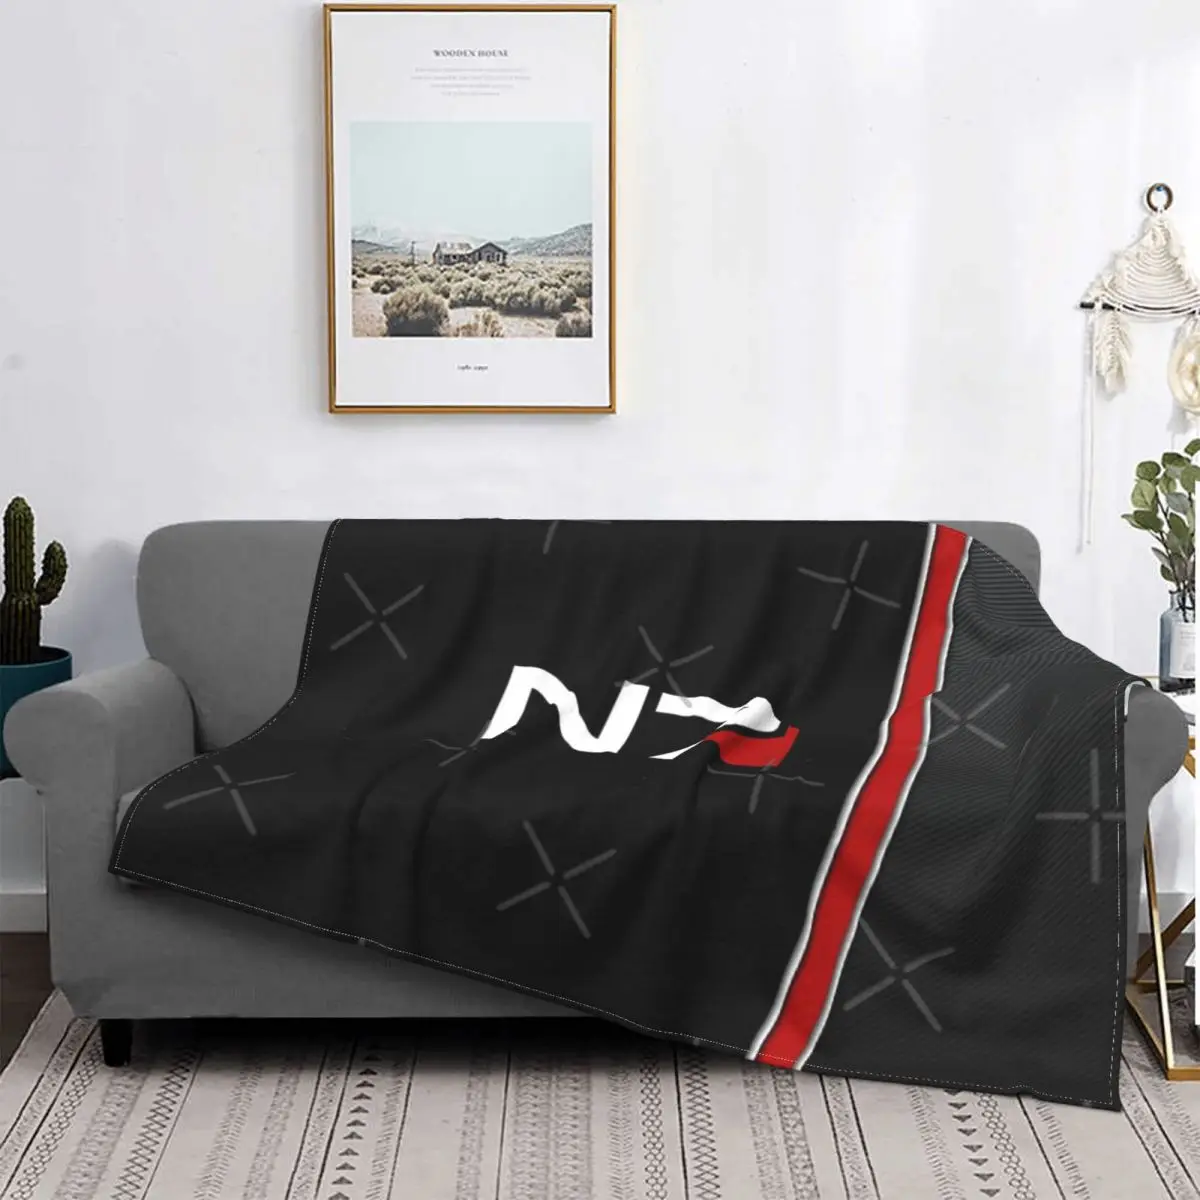 

N7 Mass Effect Emblem Blanket Bedspread Bed Plaid Comforter Beach Cover Thermal Blanket Blankets For Bed